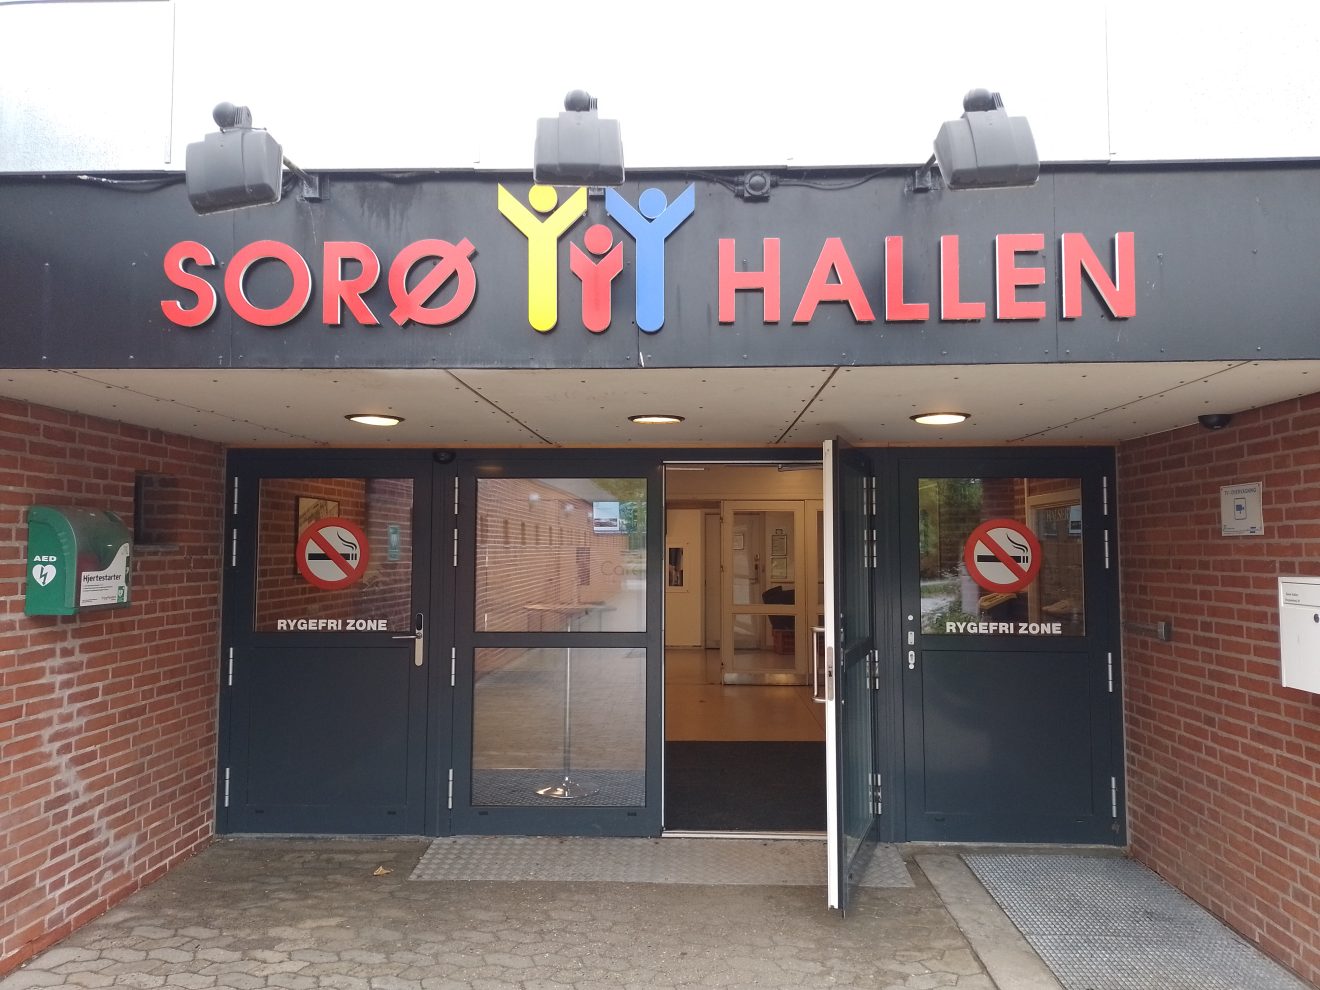 Flere medlemmer i idrætsforeningerne i Sorø Kommune